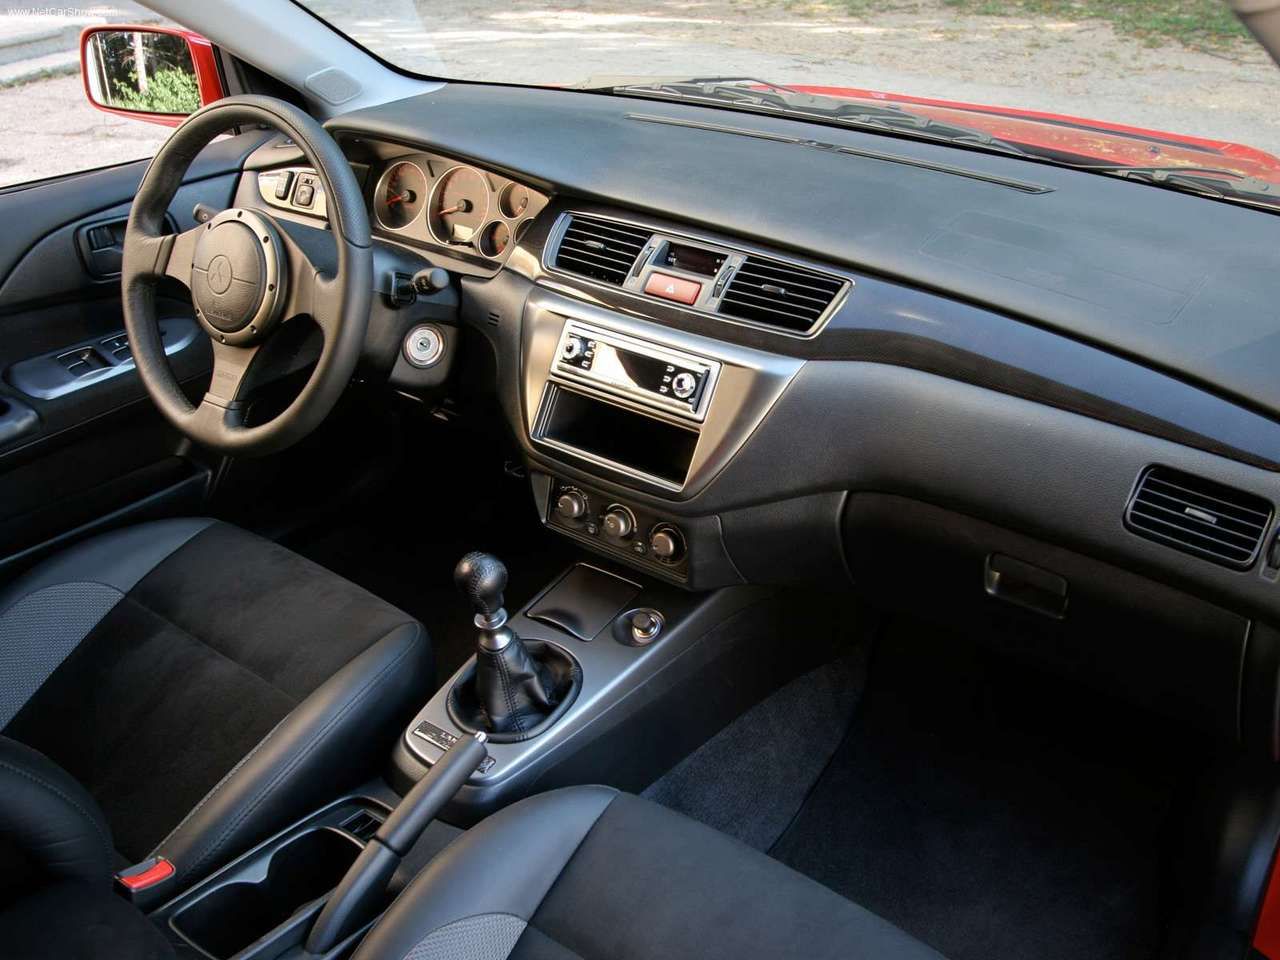 2006 Mitsubishi Lancer Evo IX, cabin interior view